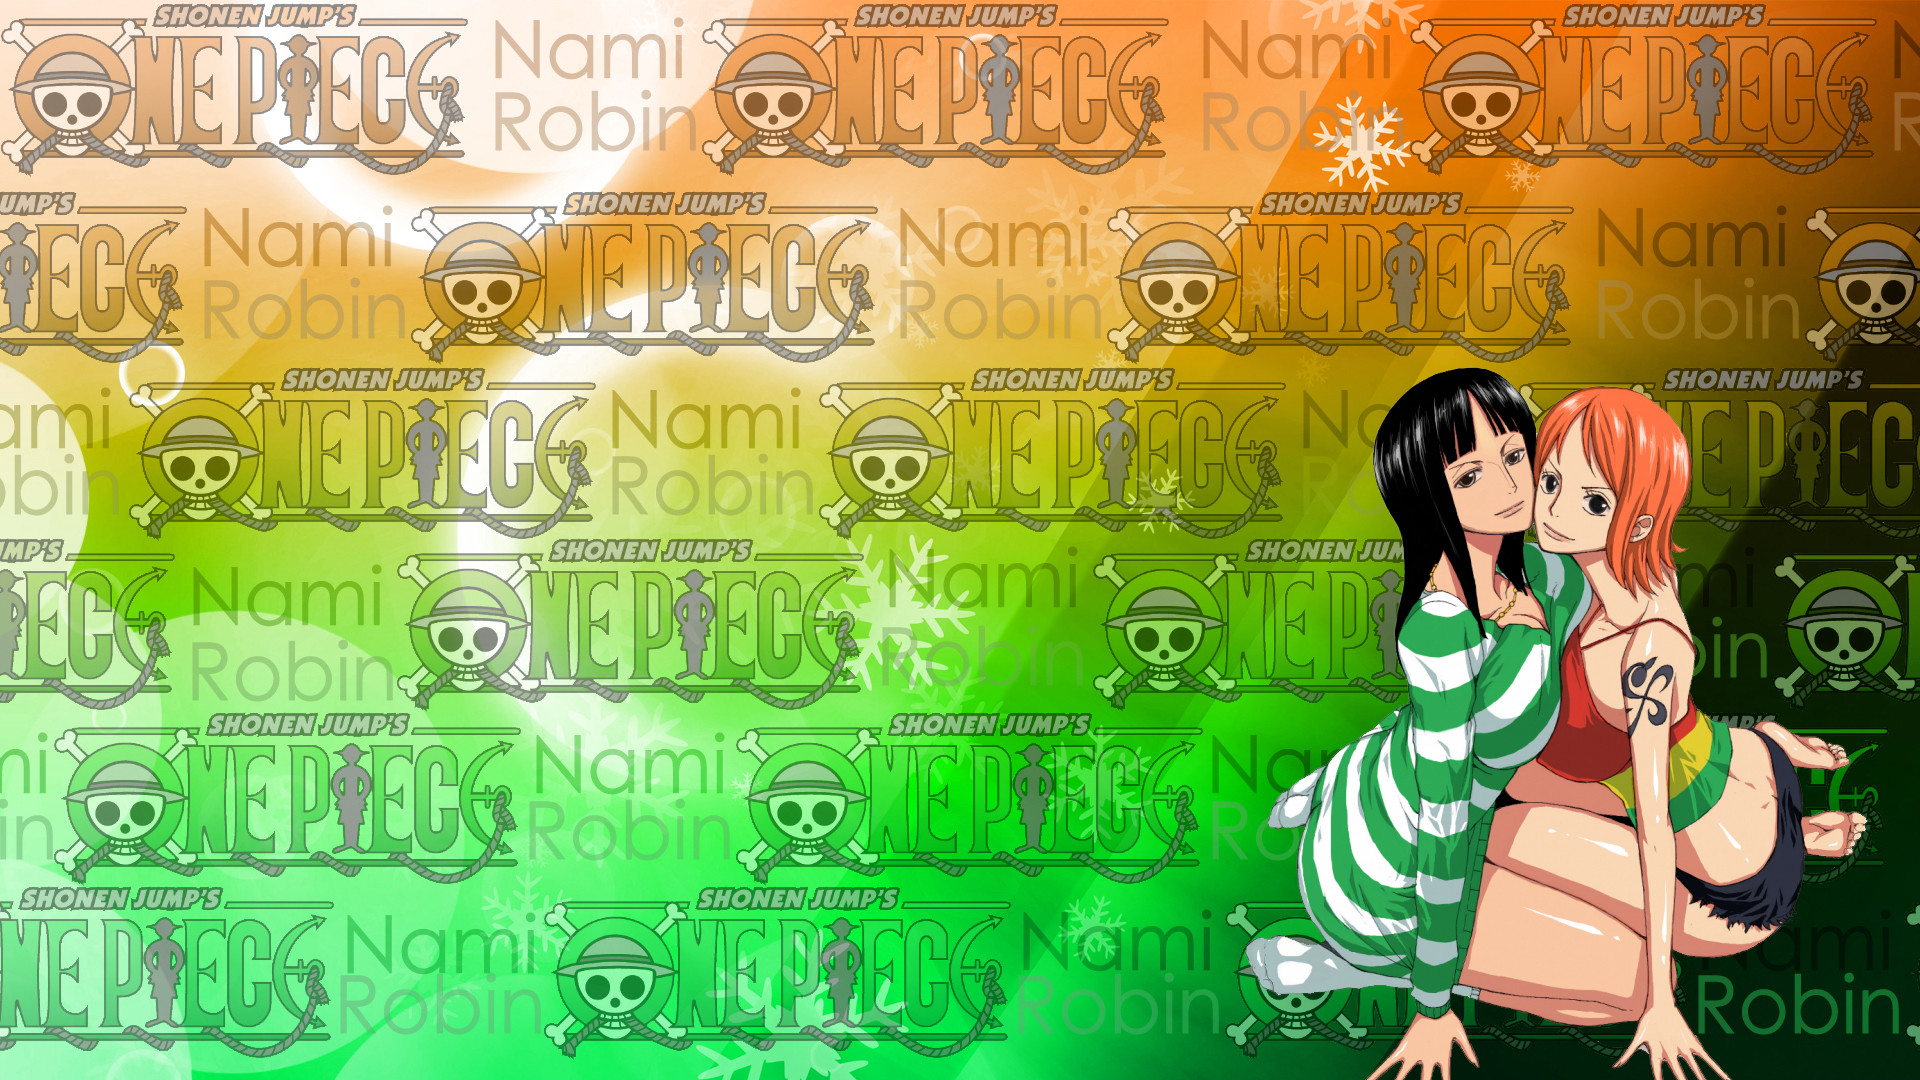 1920x1080 ... Nami X Robin Wallpaper by vJpCreate